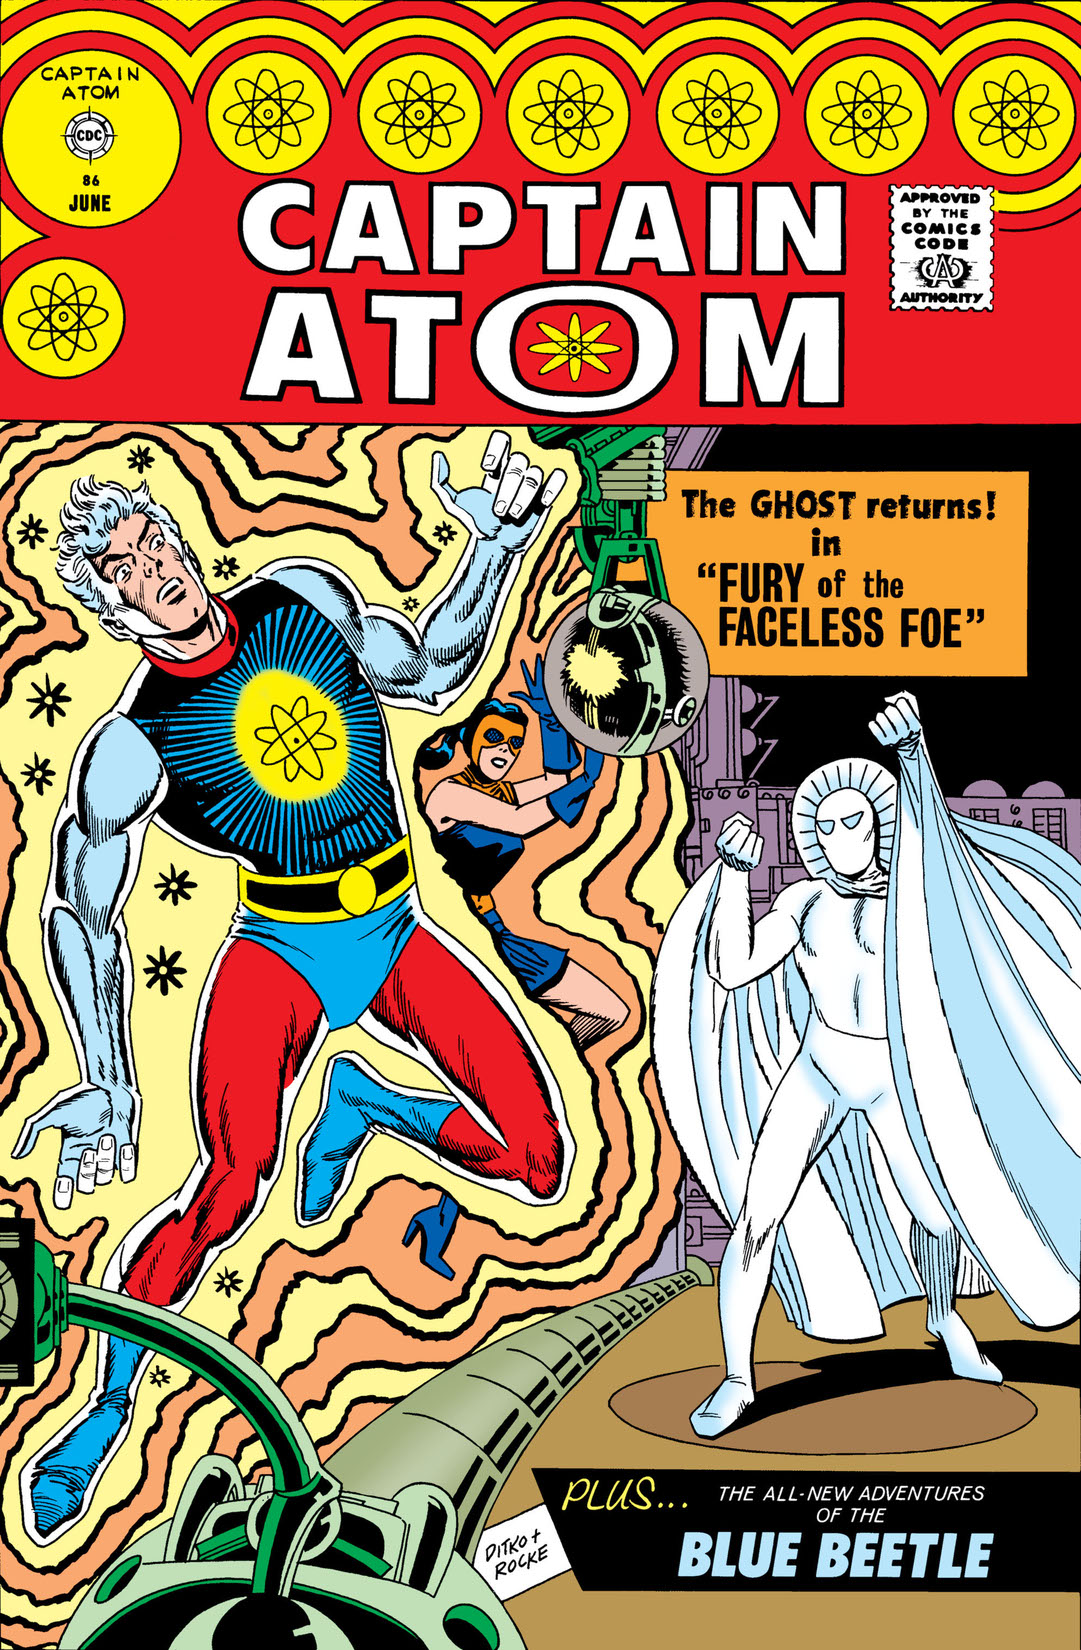 Captain Atom (1965-) #86 preview images